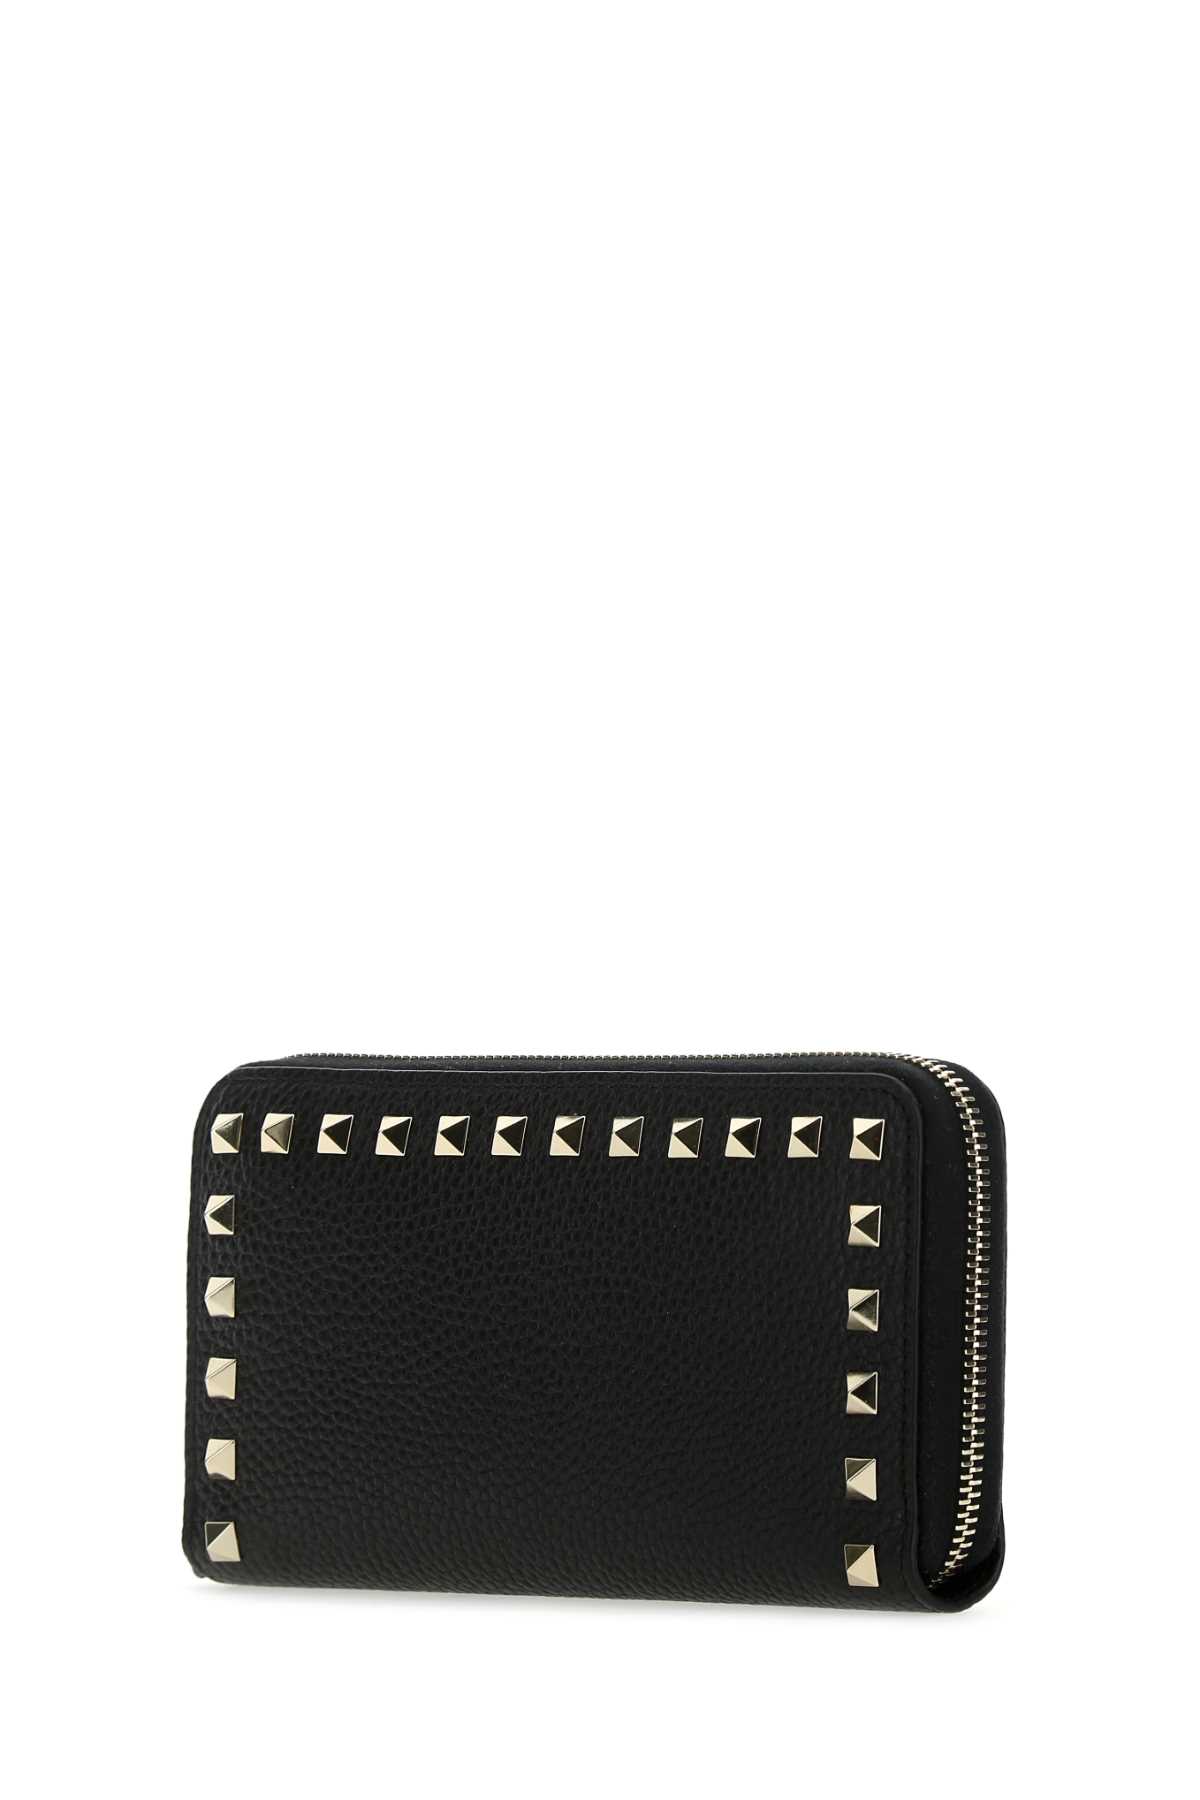 Valentino Garavani Black Leather Wallet In Nero